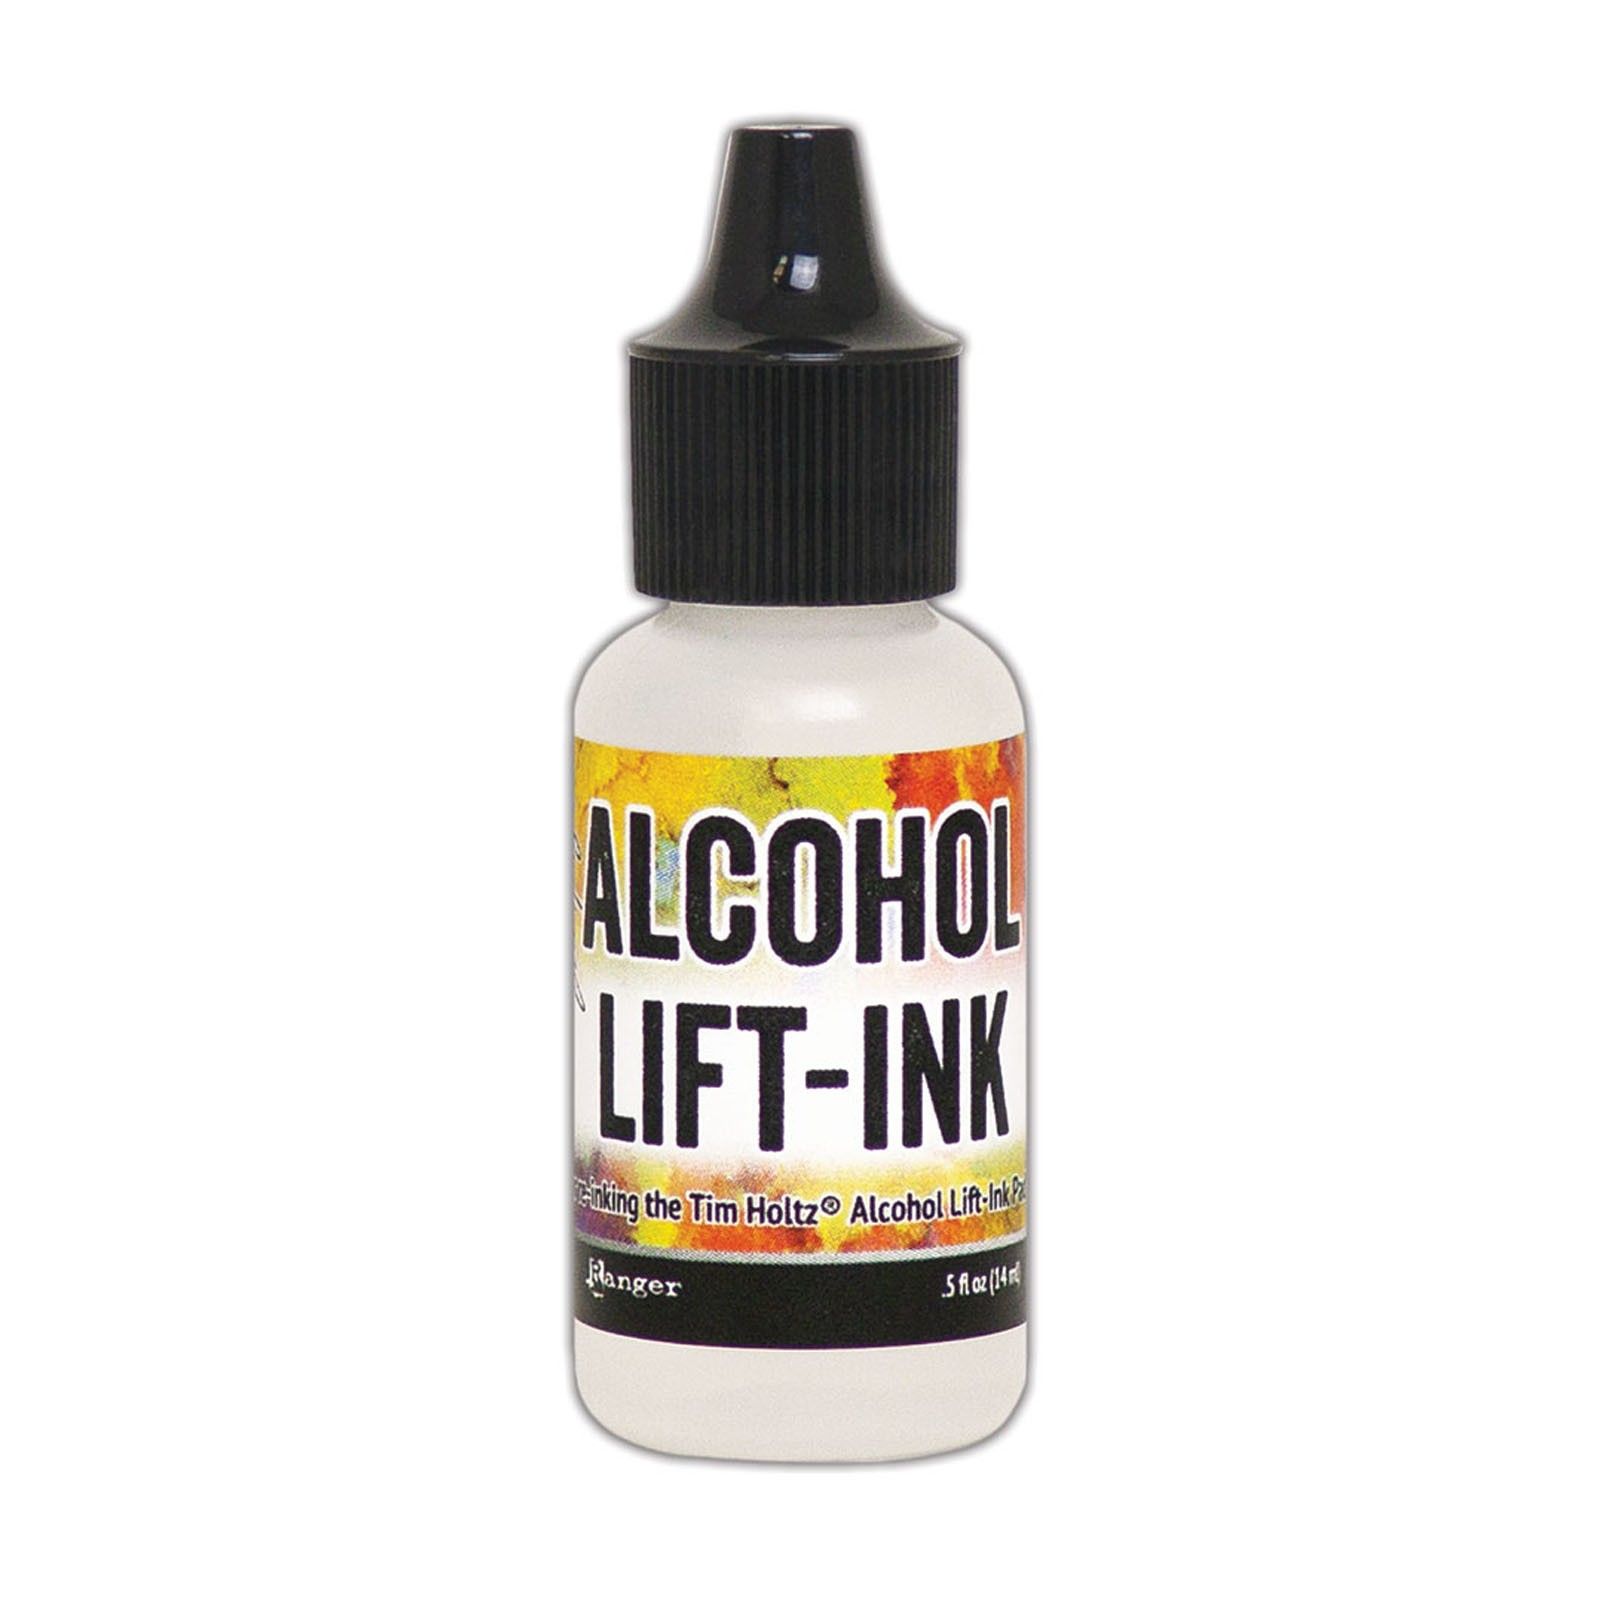 Tim Holtz Alcohol Ink - Lift-Ink Reinker 15ml